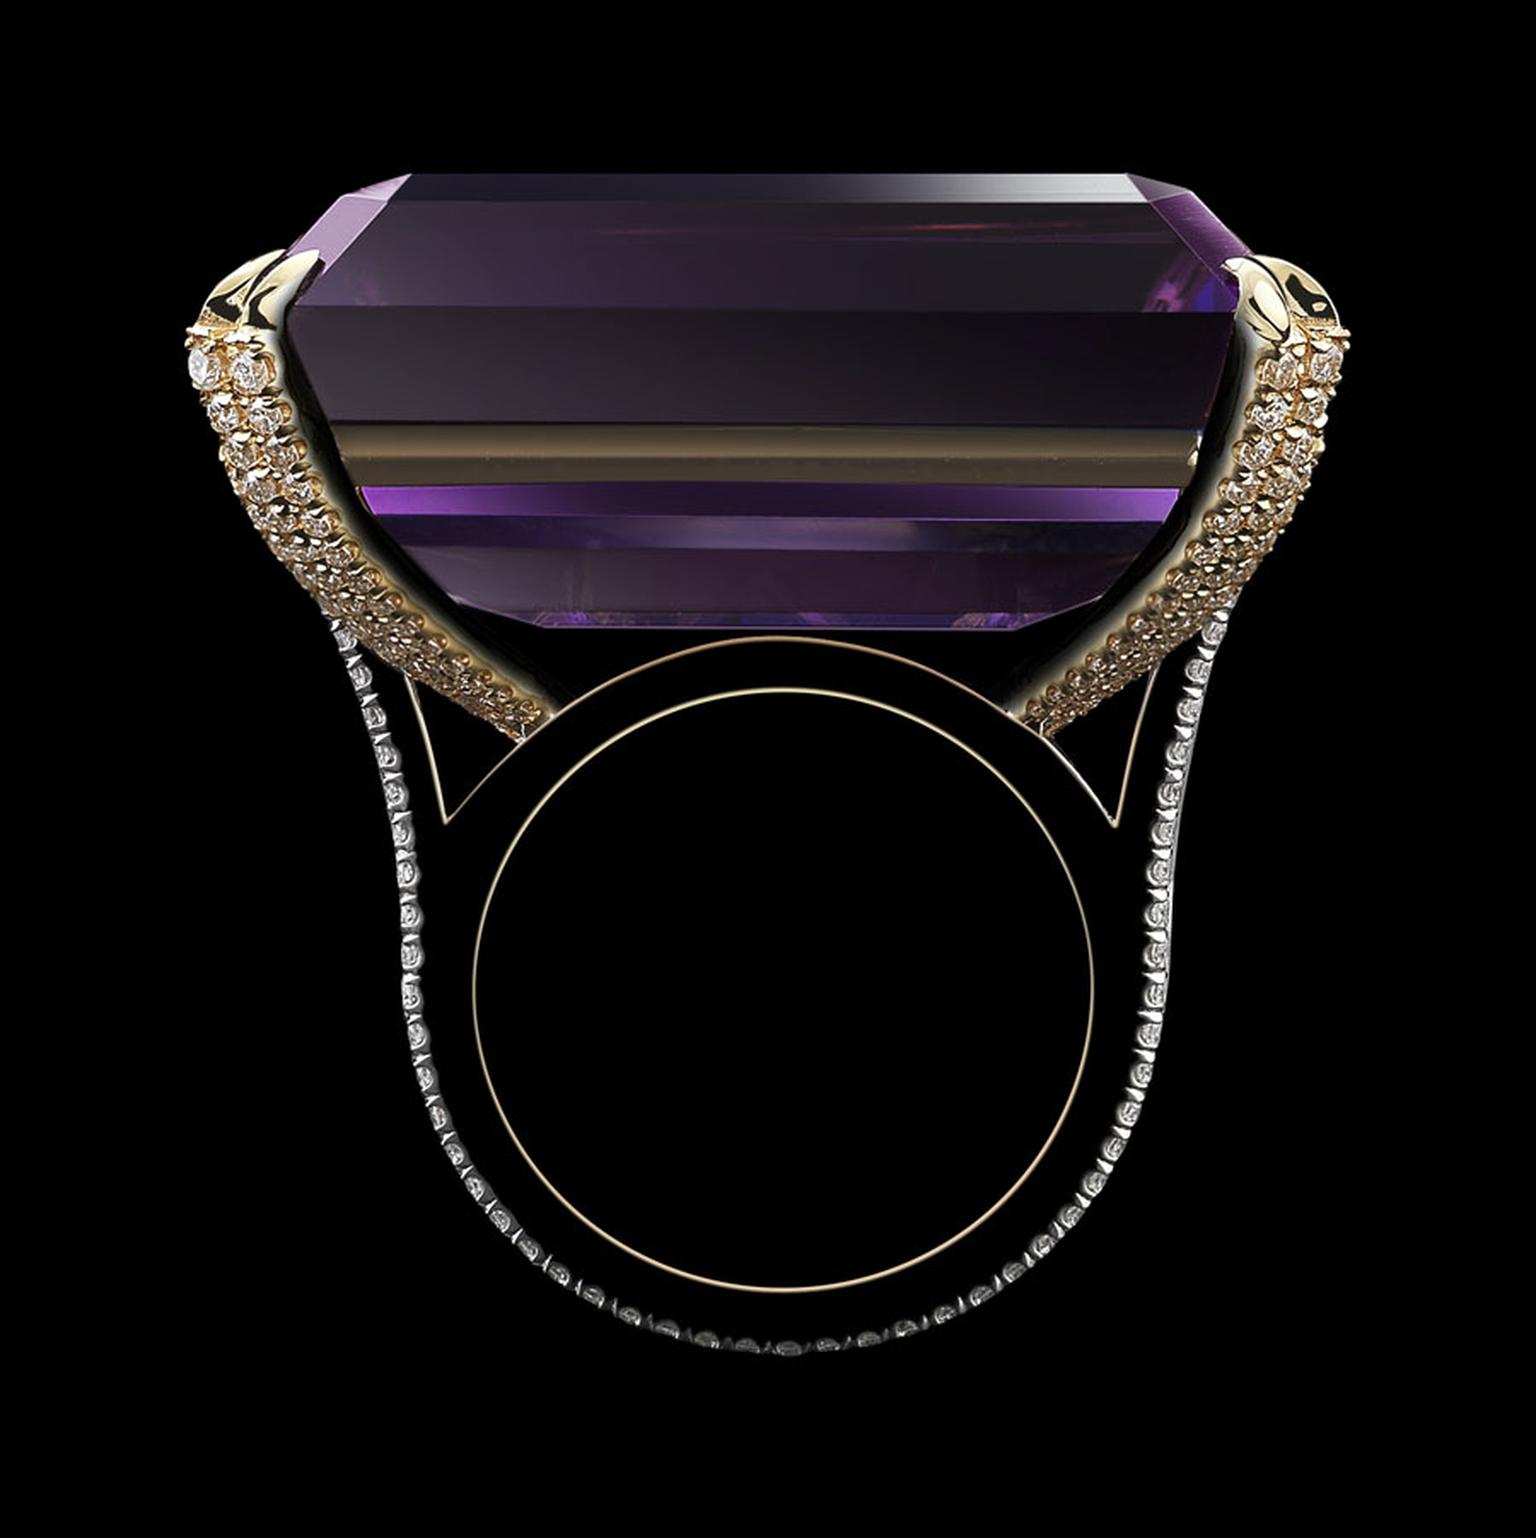 Alexandra Mor emerald-cut rich purple amethyst and diamond ring.